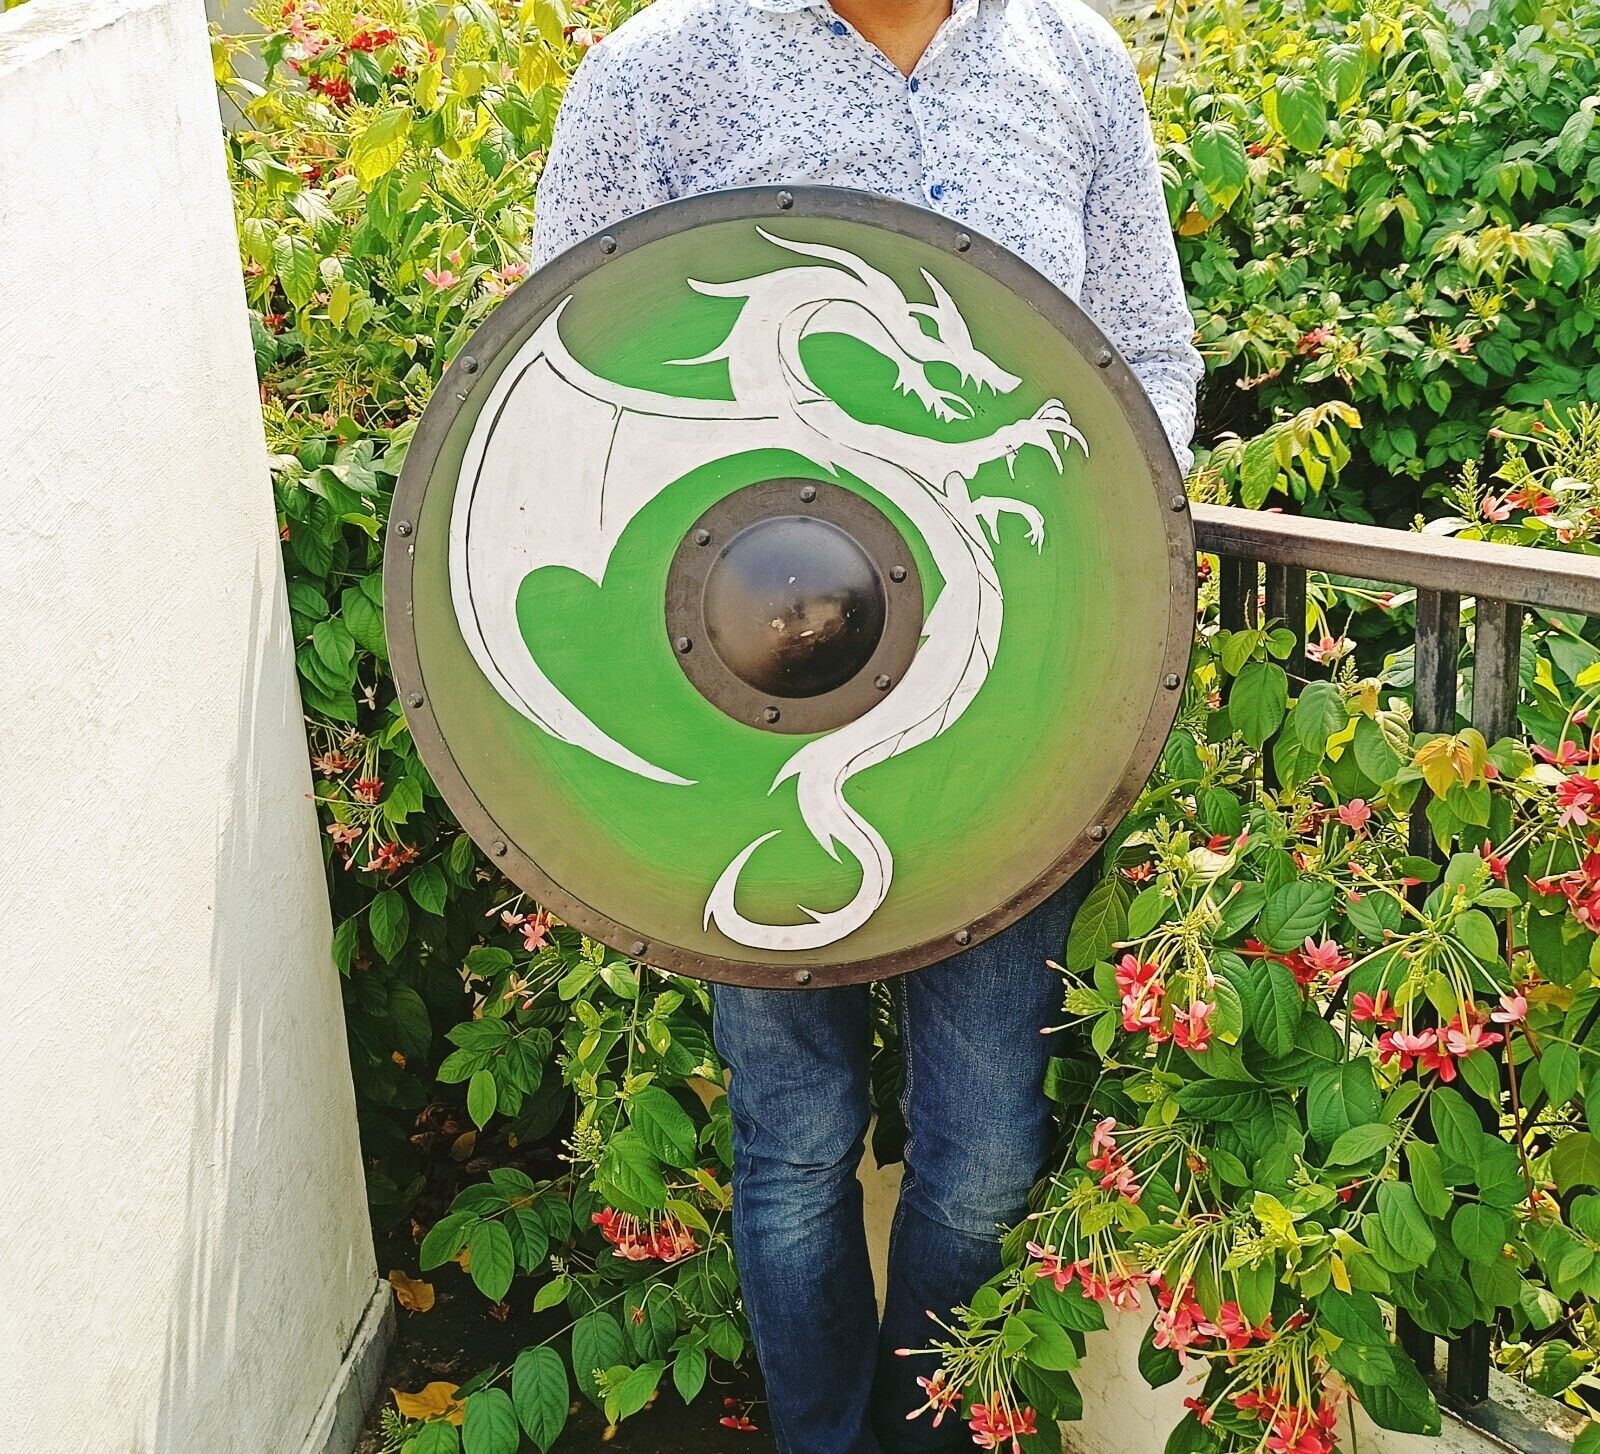 Halloween Viking Wooden Dragon Shield Dragon Prop Cosplay Medieval Armor LARP